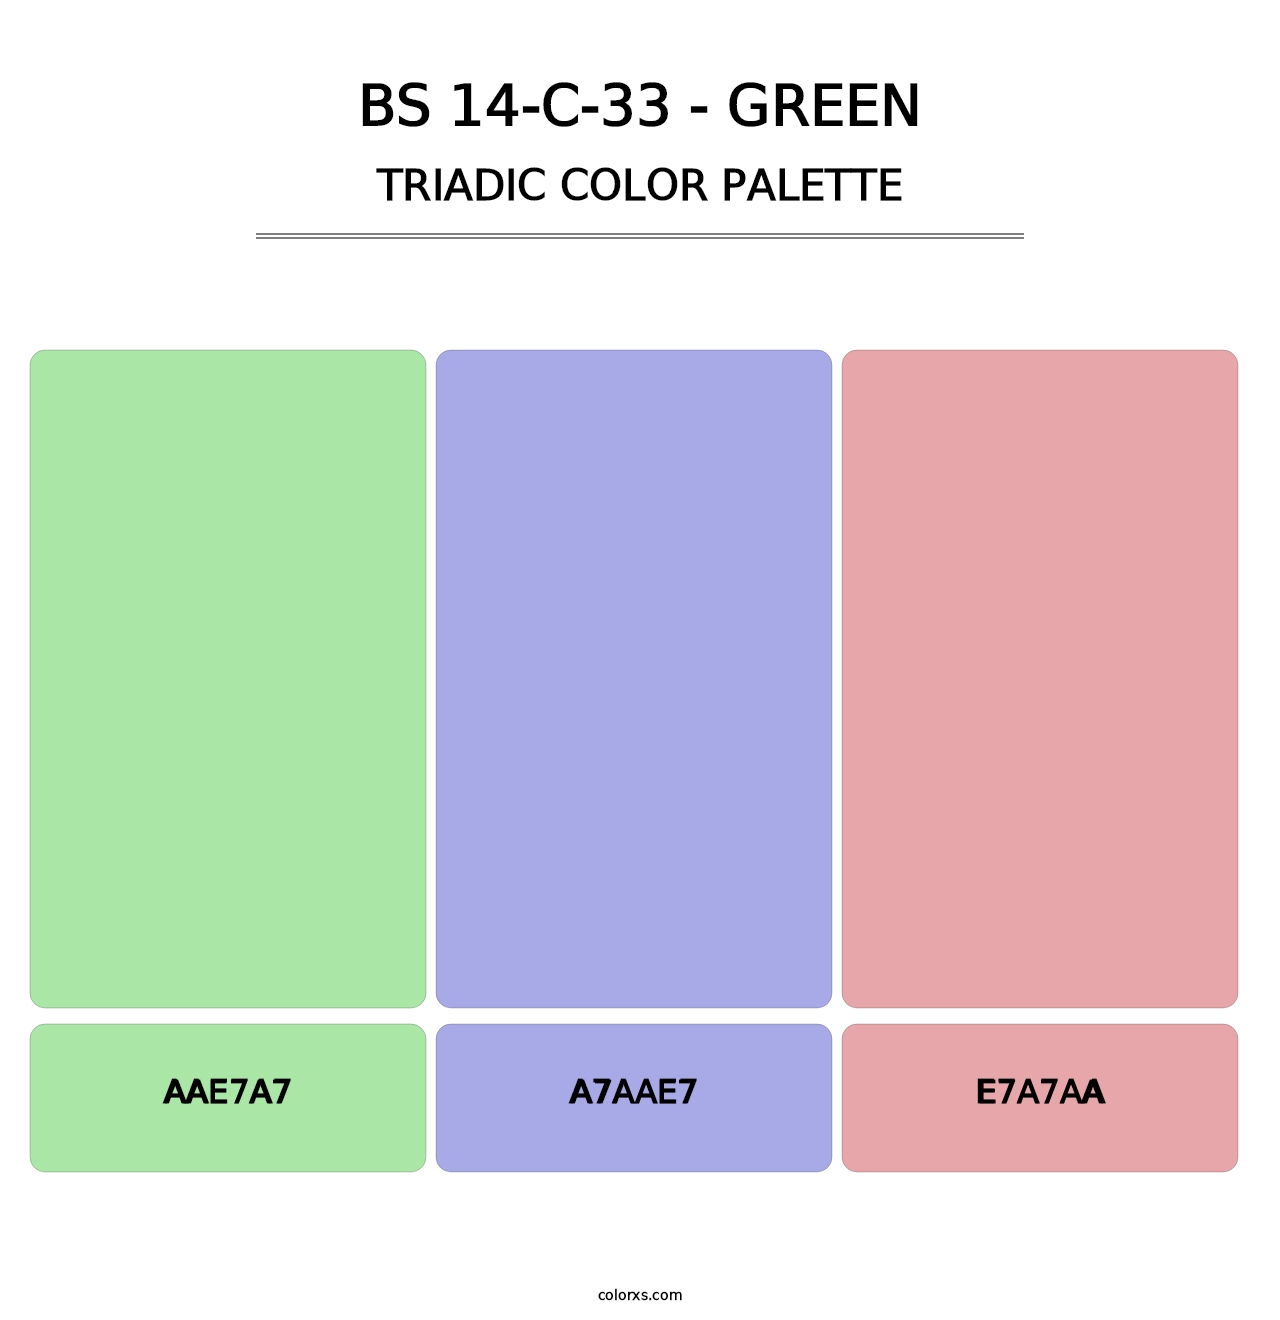 BS 14-C-33 - Green - Triadic Color Palette